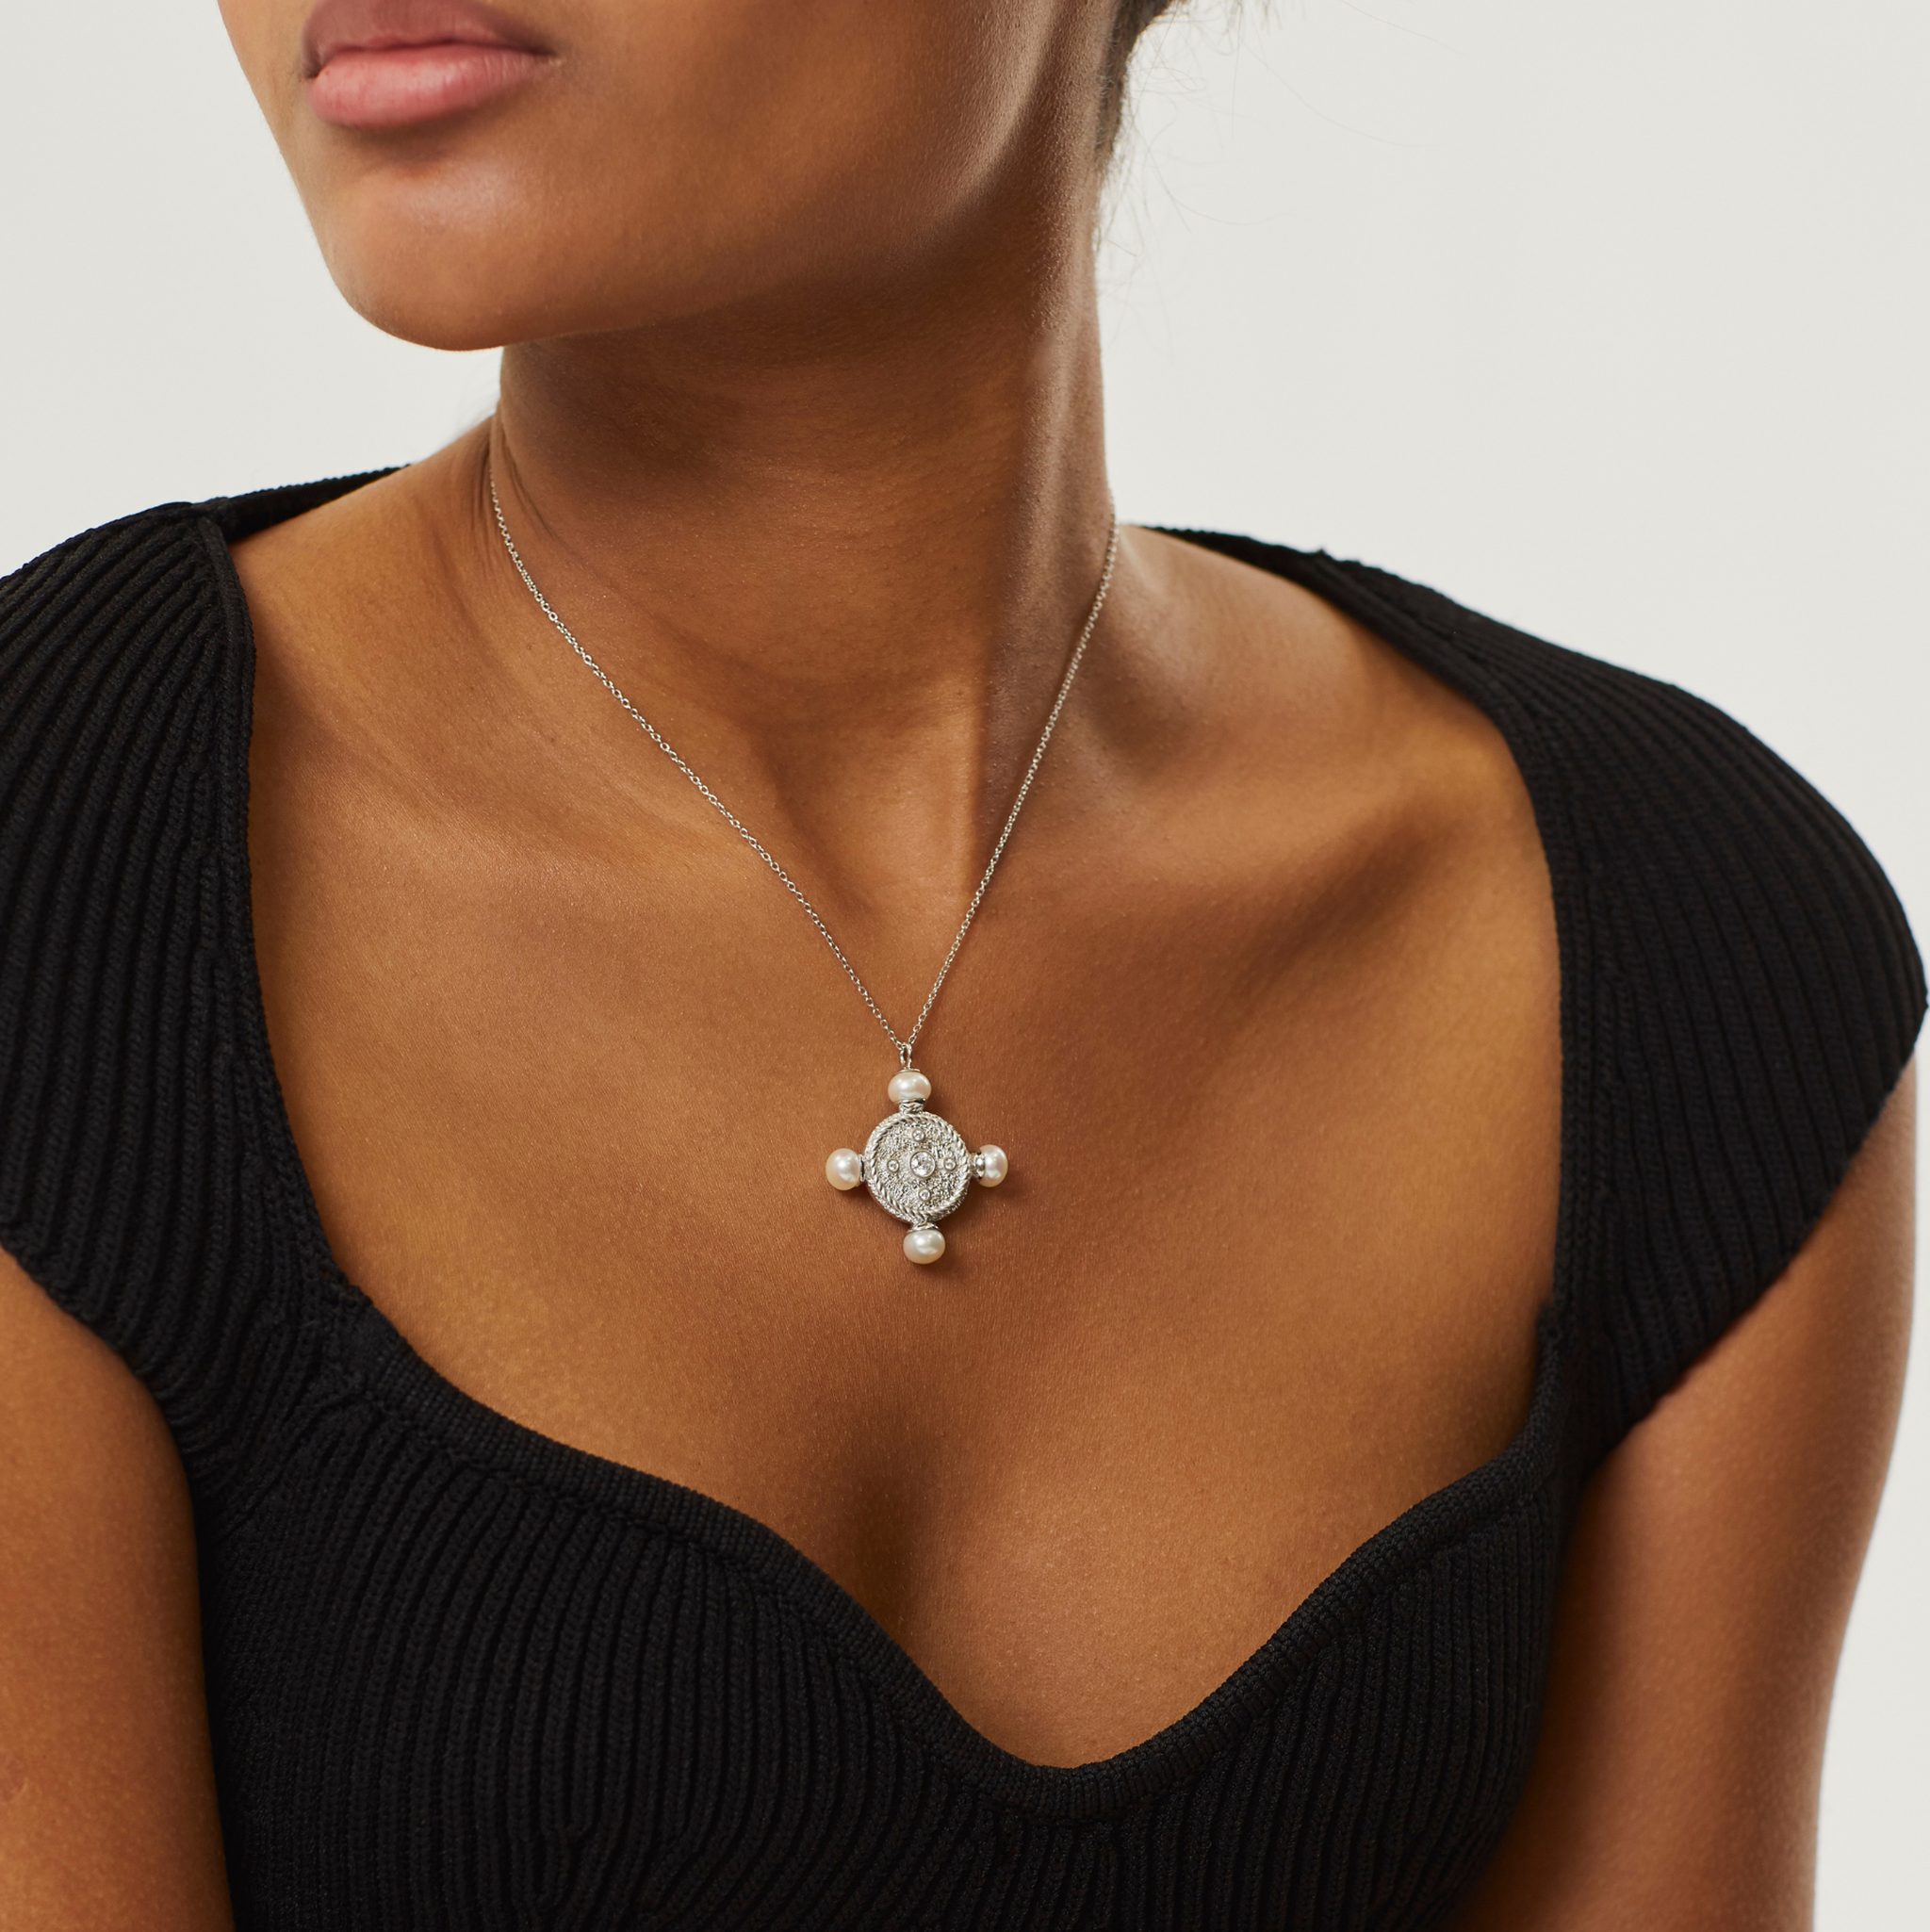 The New Romantics Silver Pearl Necklace